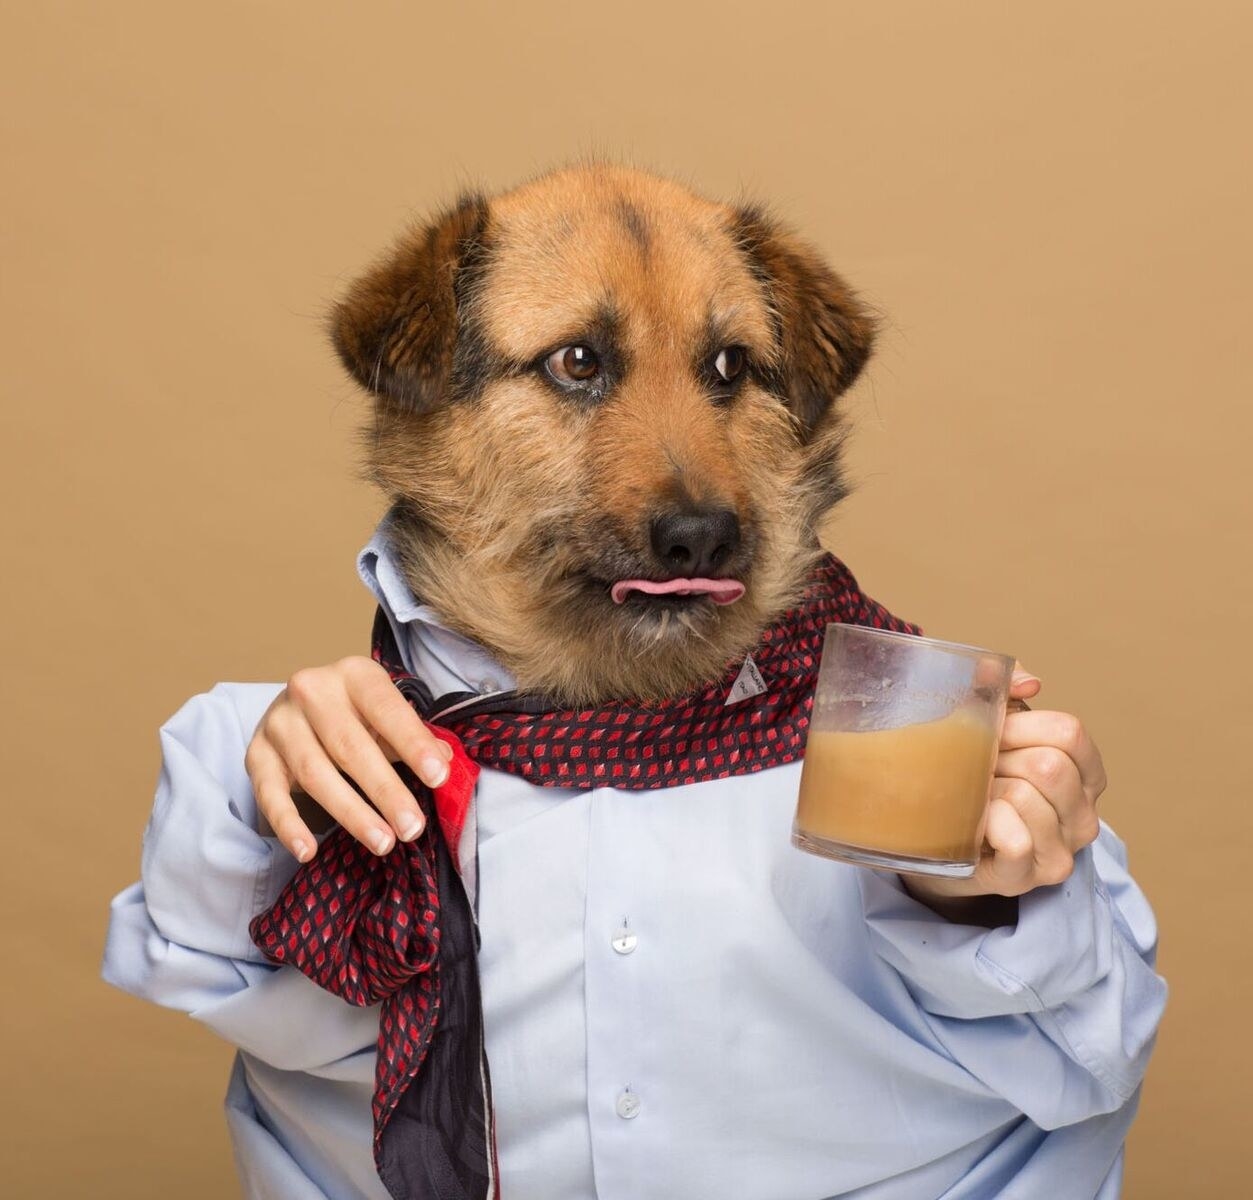 Можно собаке чай. Мужчина, животными и кофе. Dog drinking Coffee. Dog friendly Coffee place.